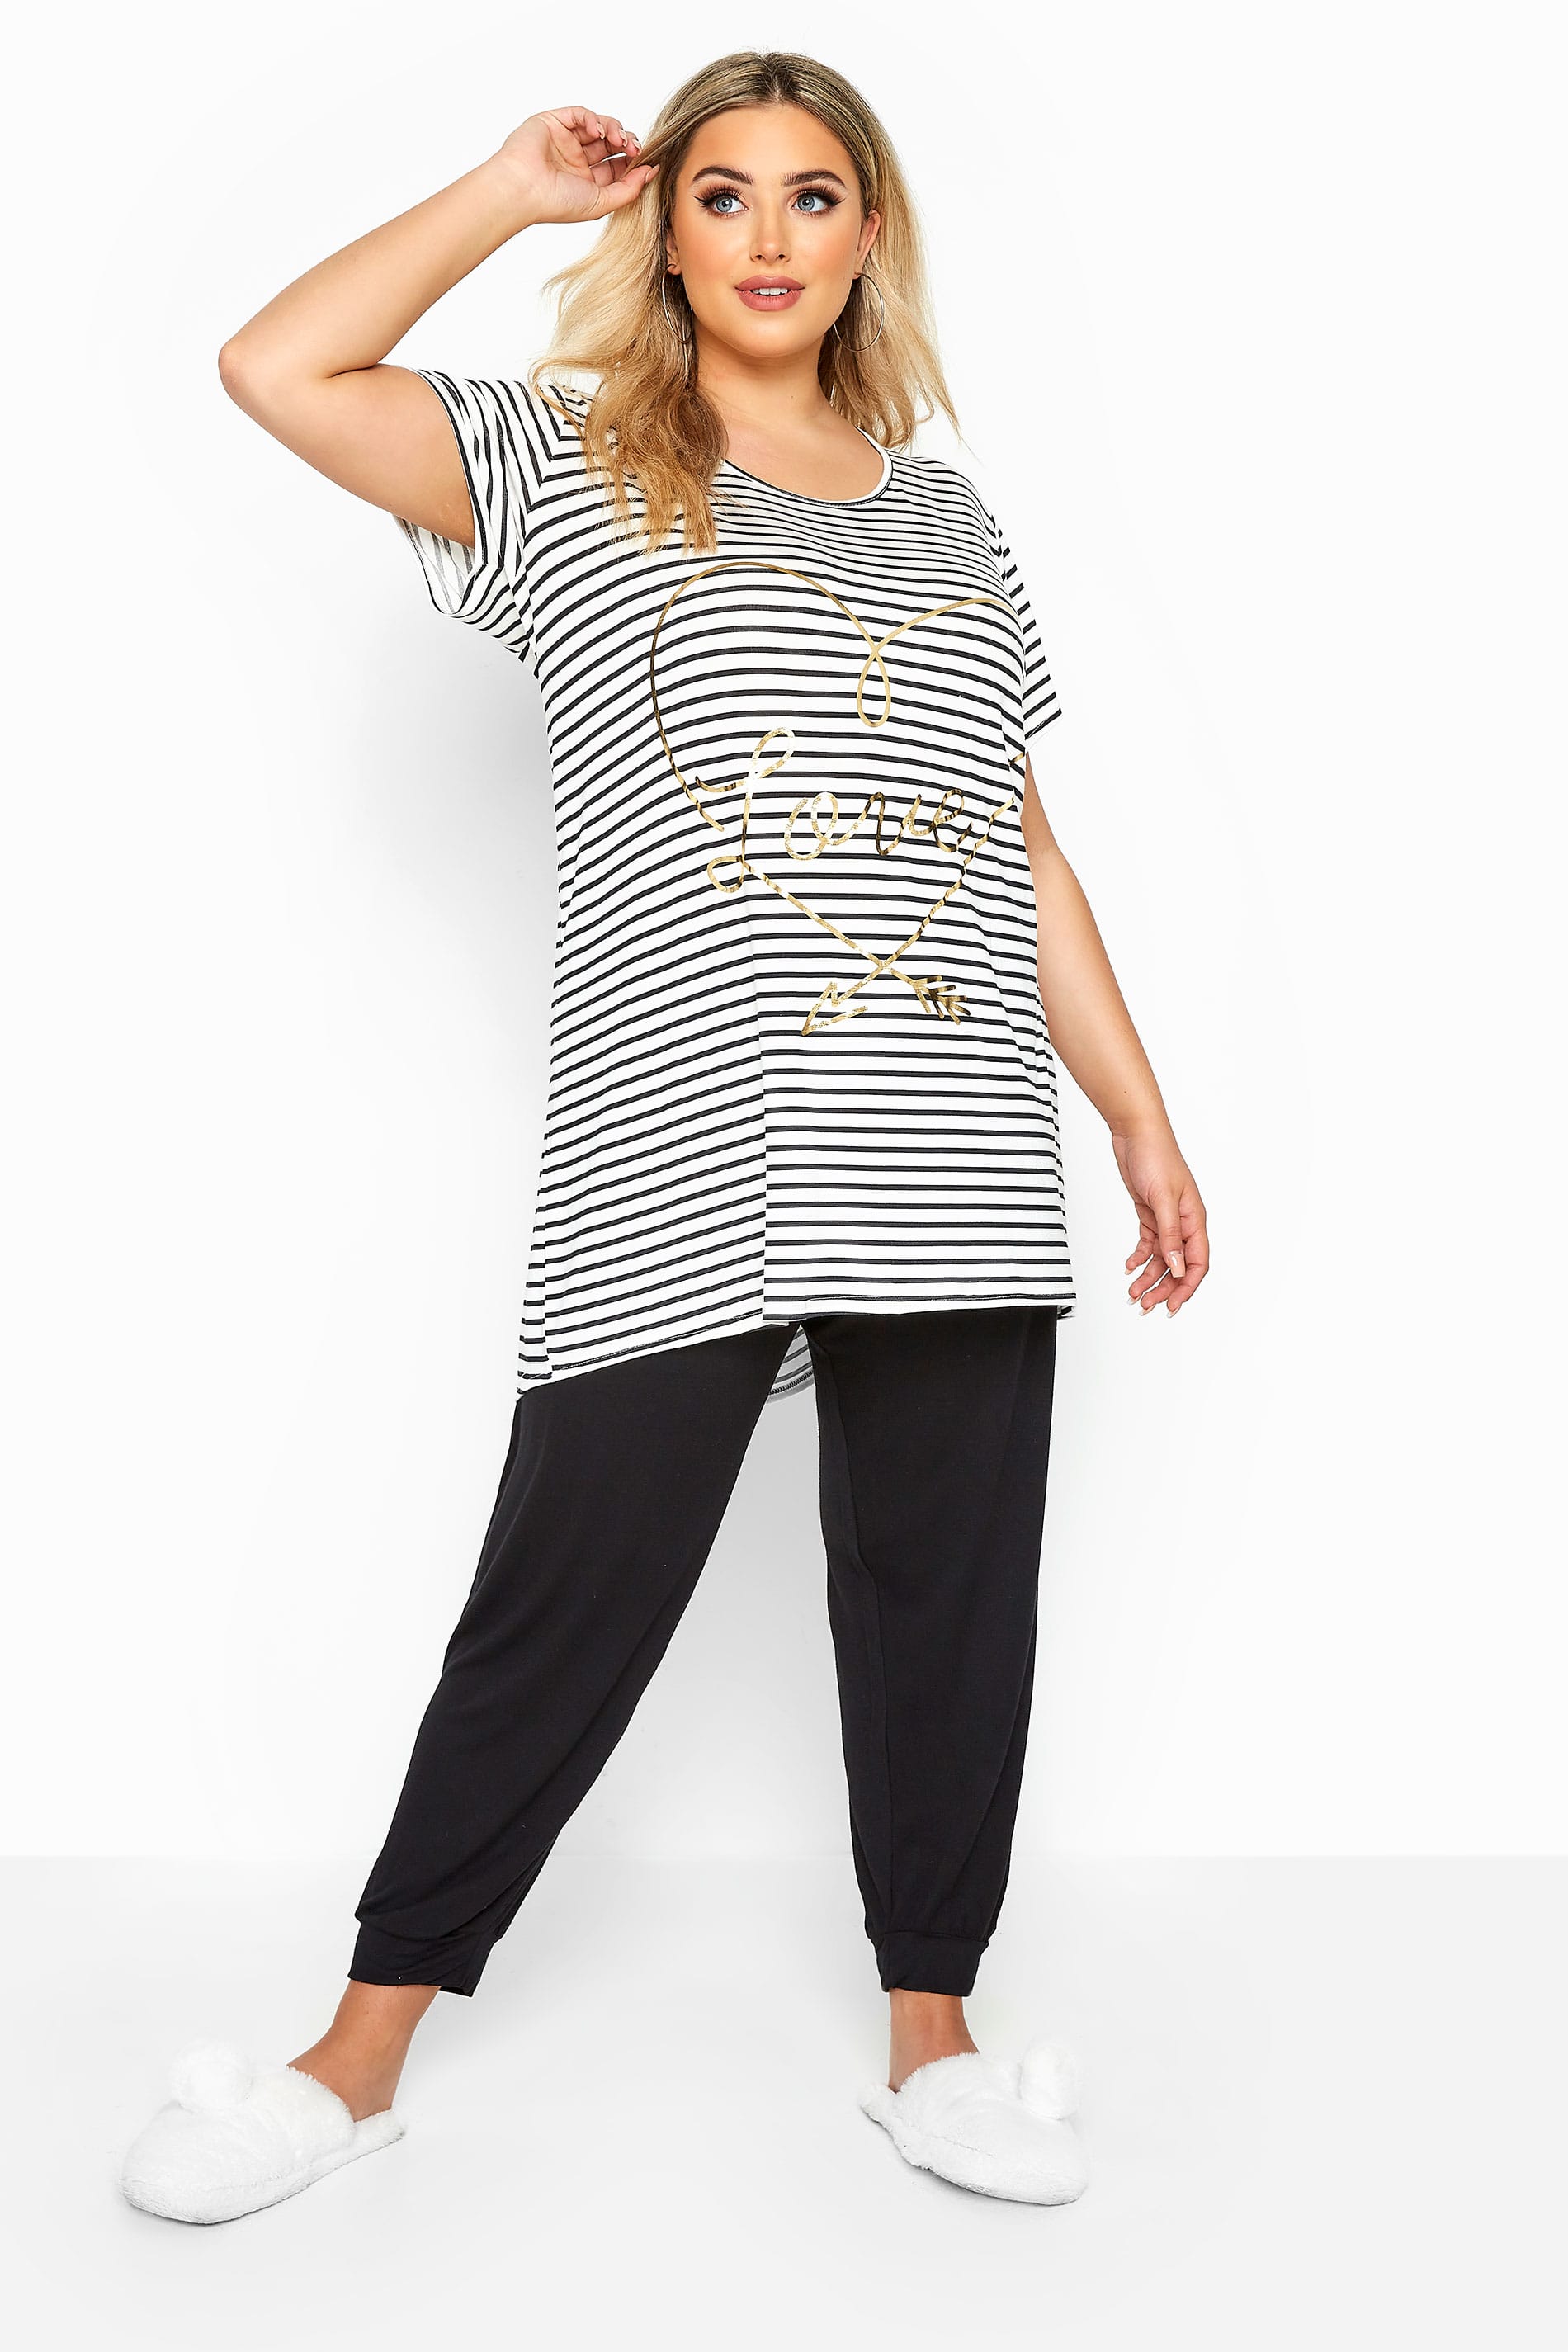 Black & White Striped Foil Love Pyjama Set | Yours Clothing